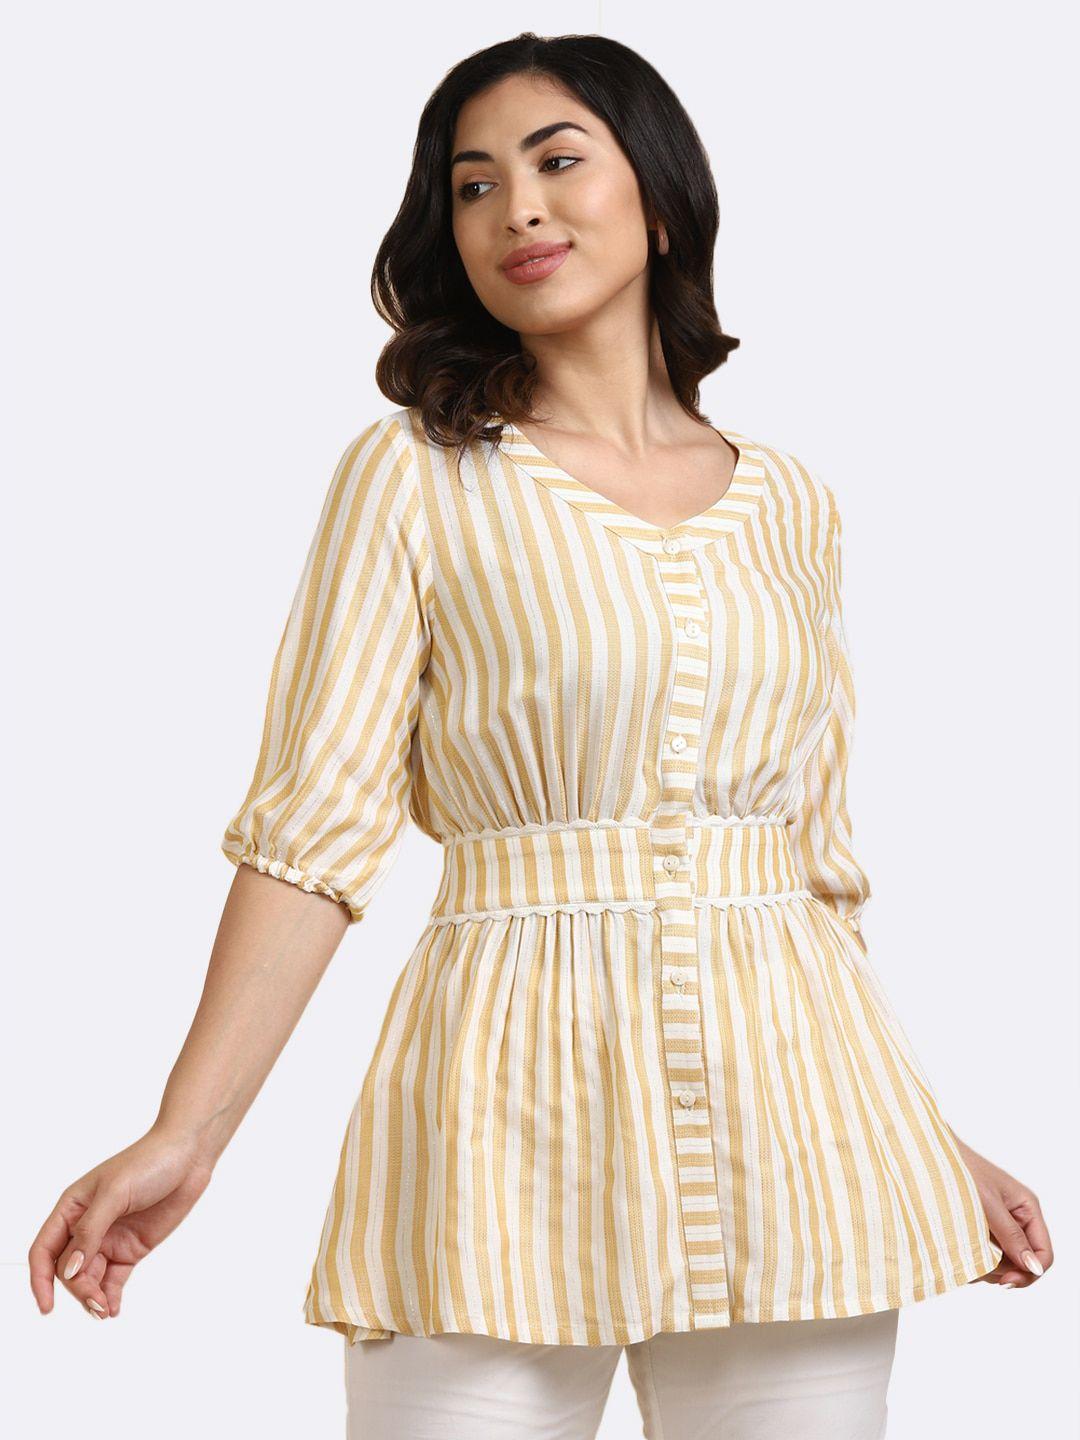 deebaco women yellow striped shirt style top with belt